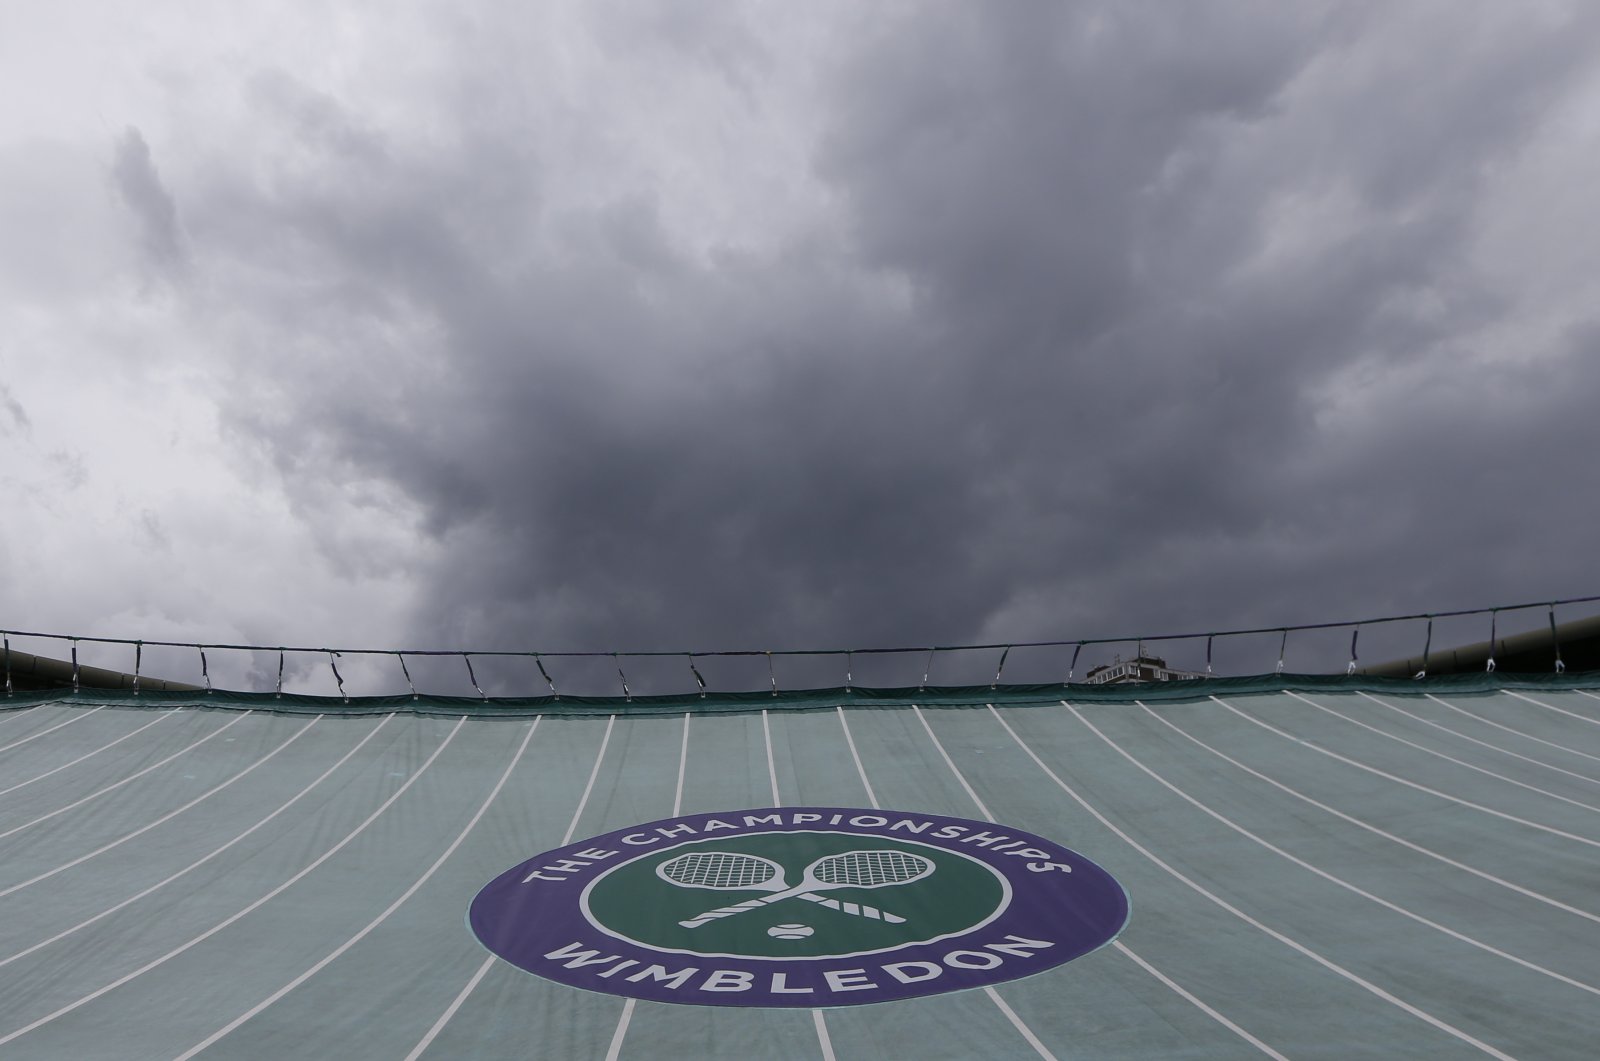 The Wimbledon logo is seen at the All England Lawn Tennis Championships, Wimbledon, London, June 28, 2014. (AP Photo)